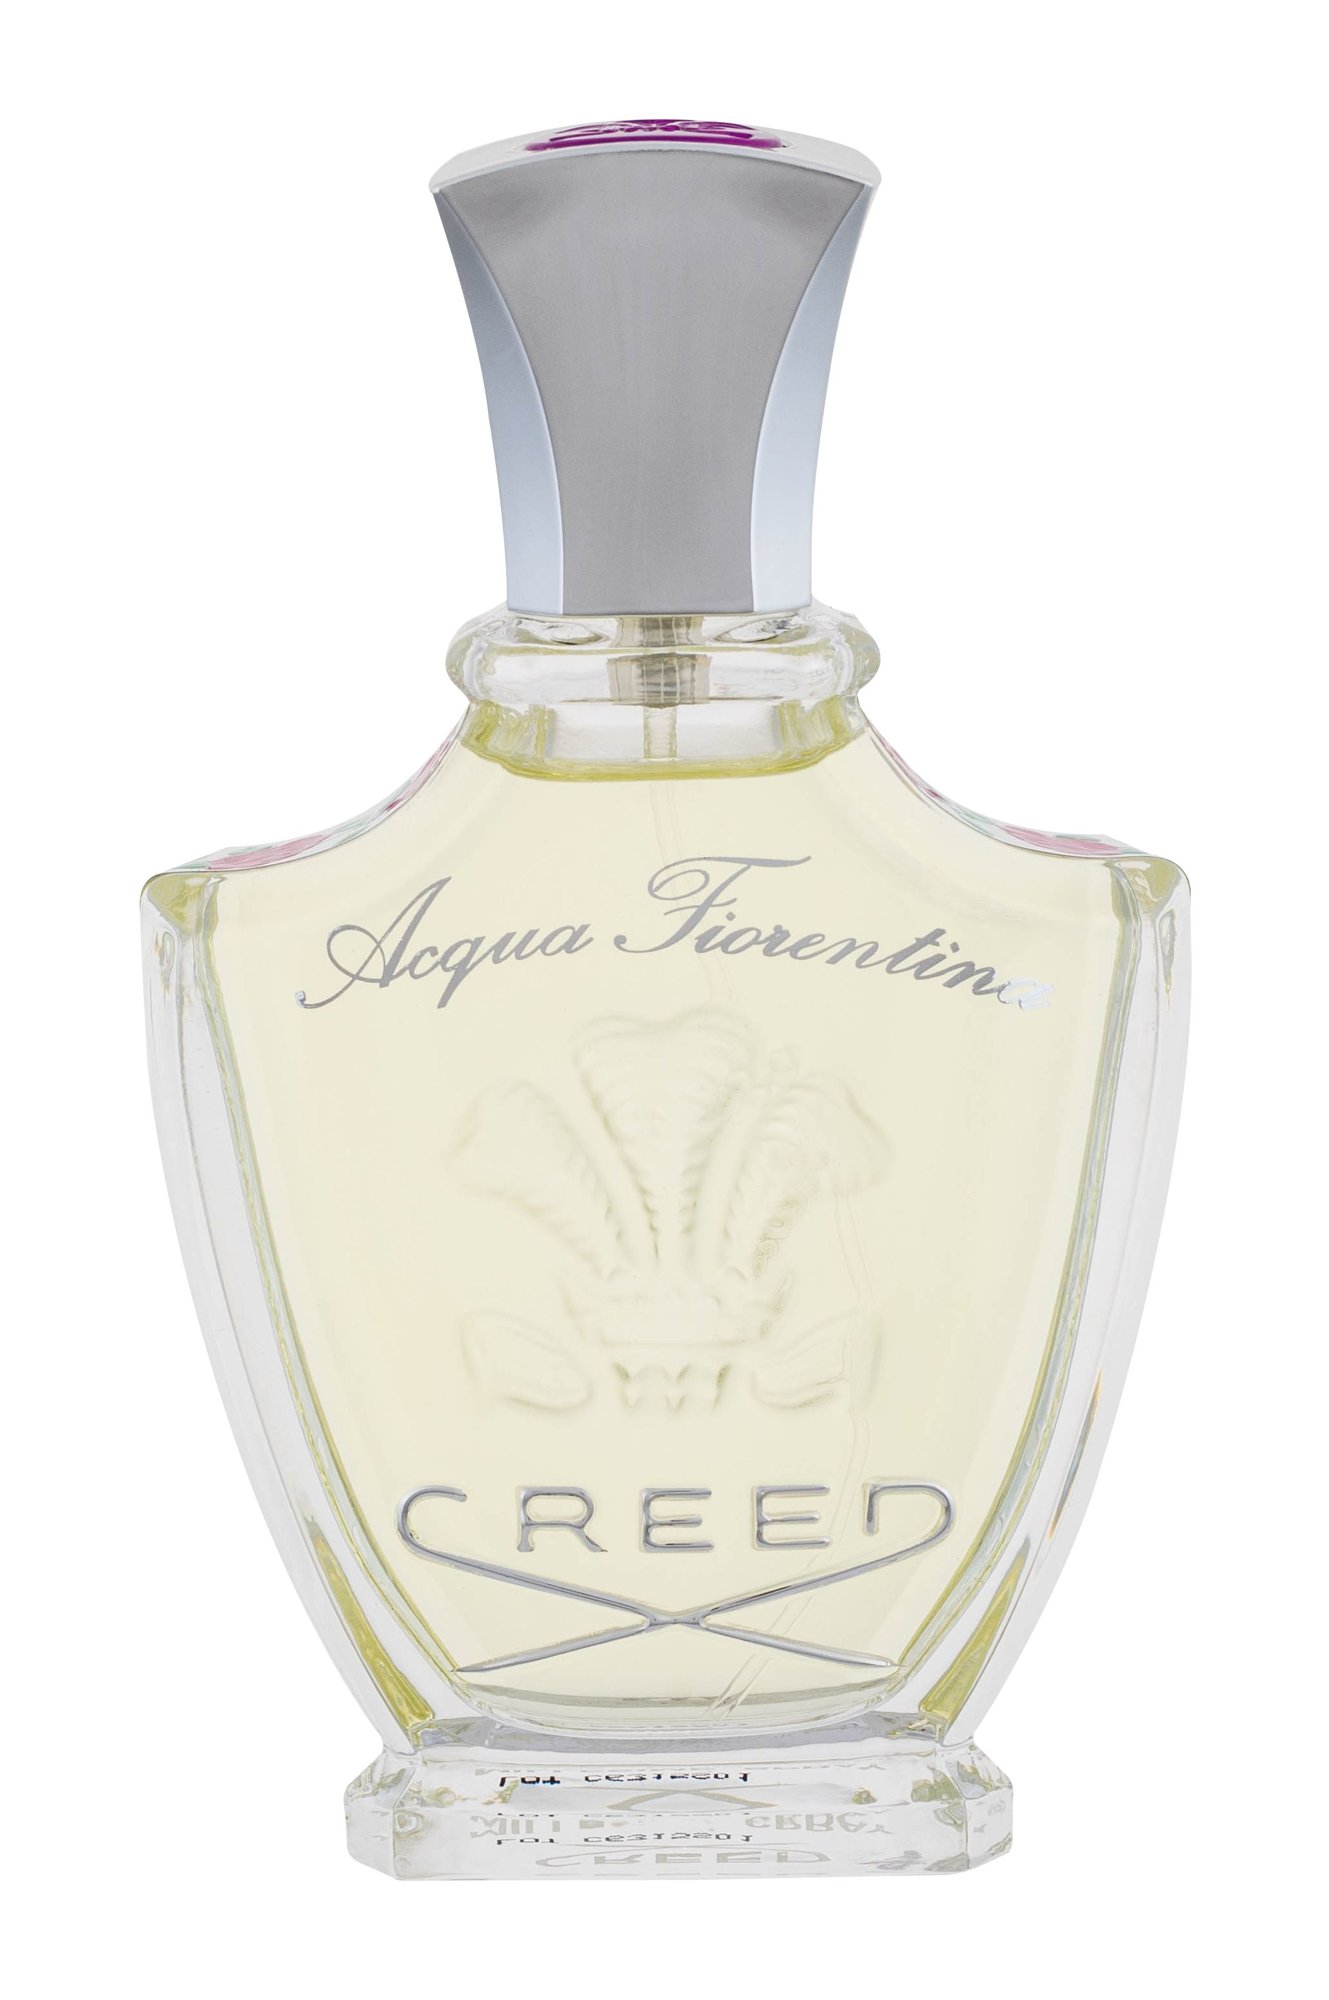 Creed Acqua Fiorentina, Parfumovaná voda 75ml